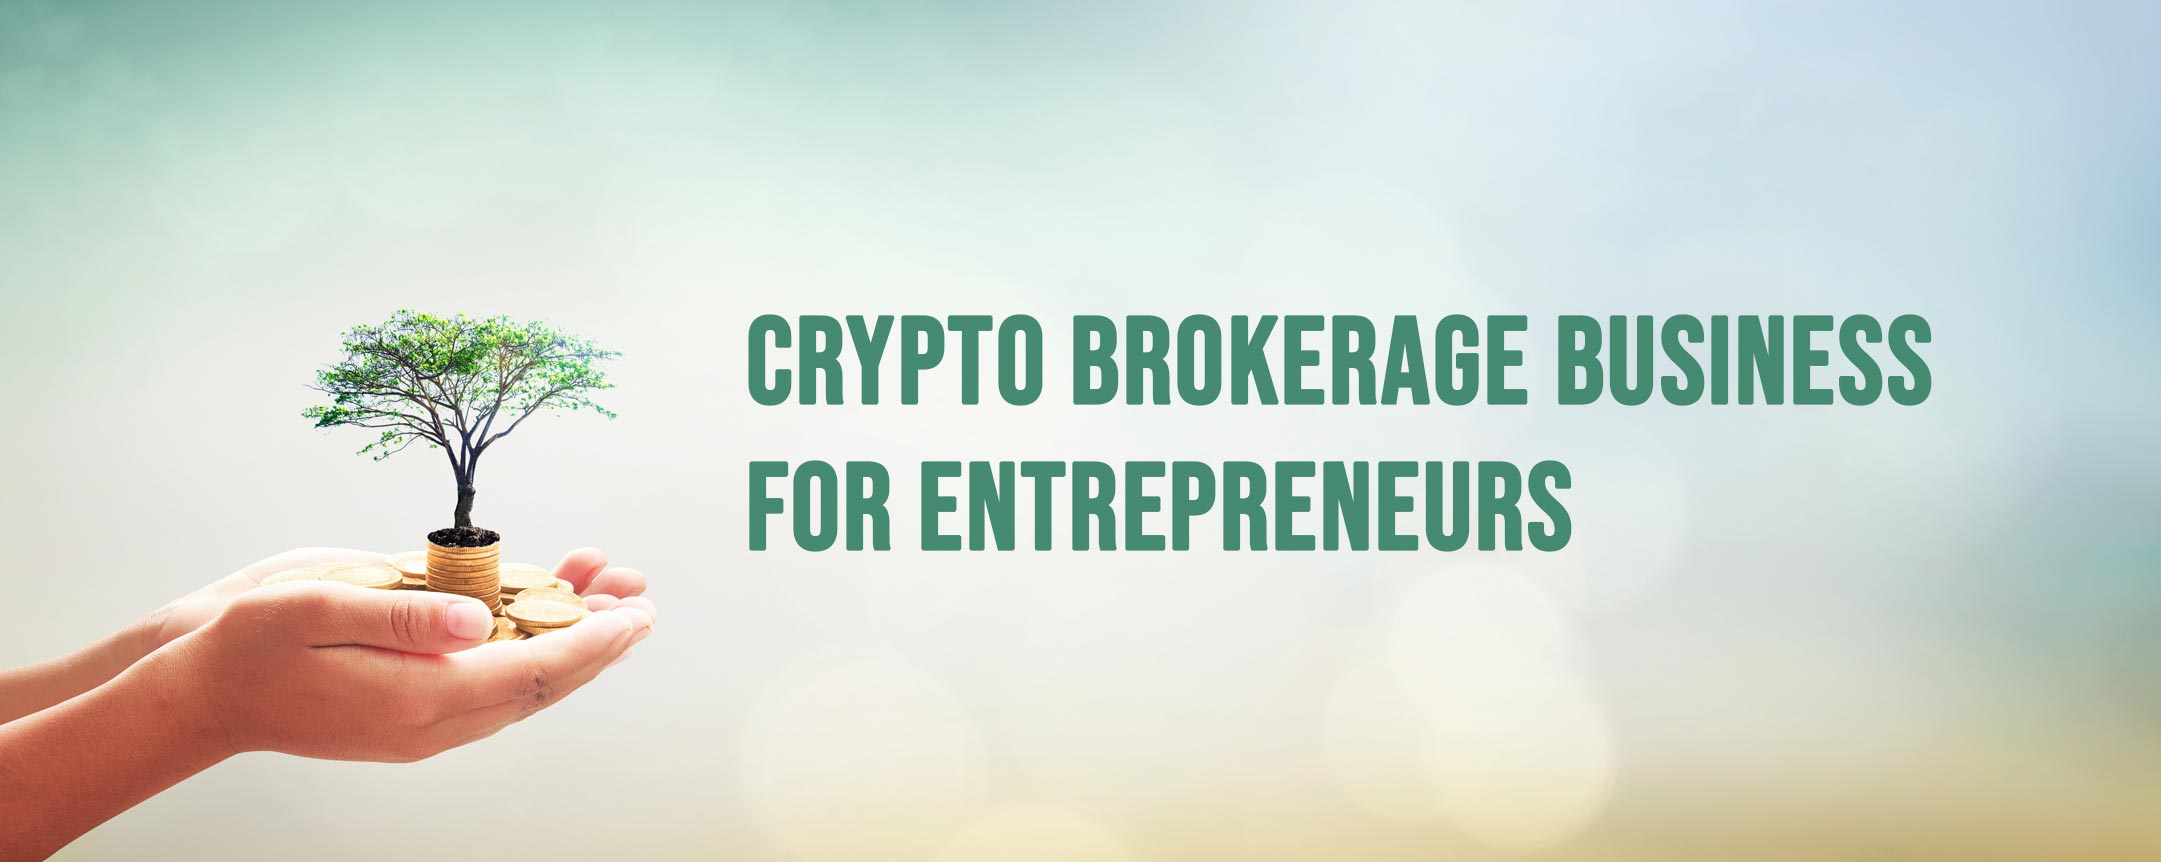 Crypto Brokerage Business For Entrepreneurs